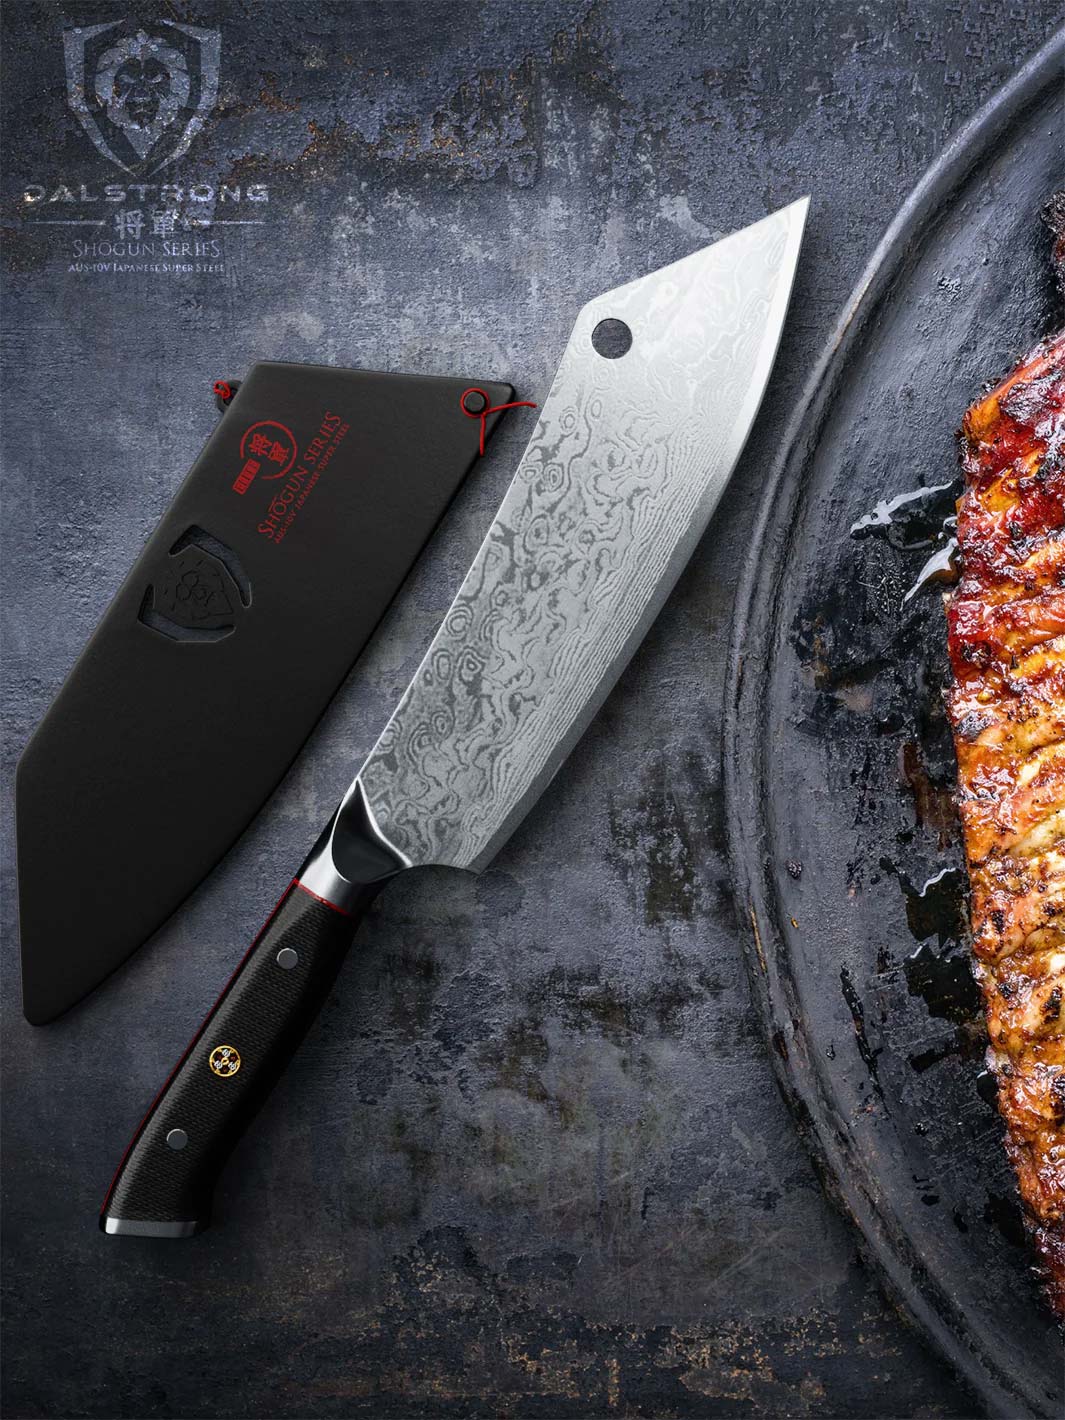 DALSTRONG Shogun Series 8 Crixus Japanese Steel AUS-10V Hybrid Chef Knife